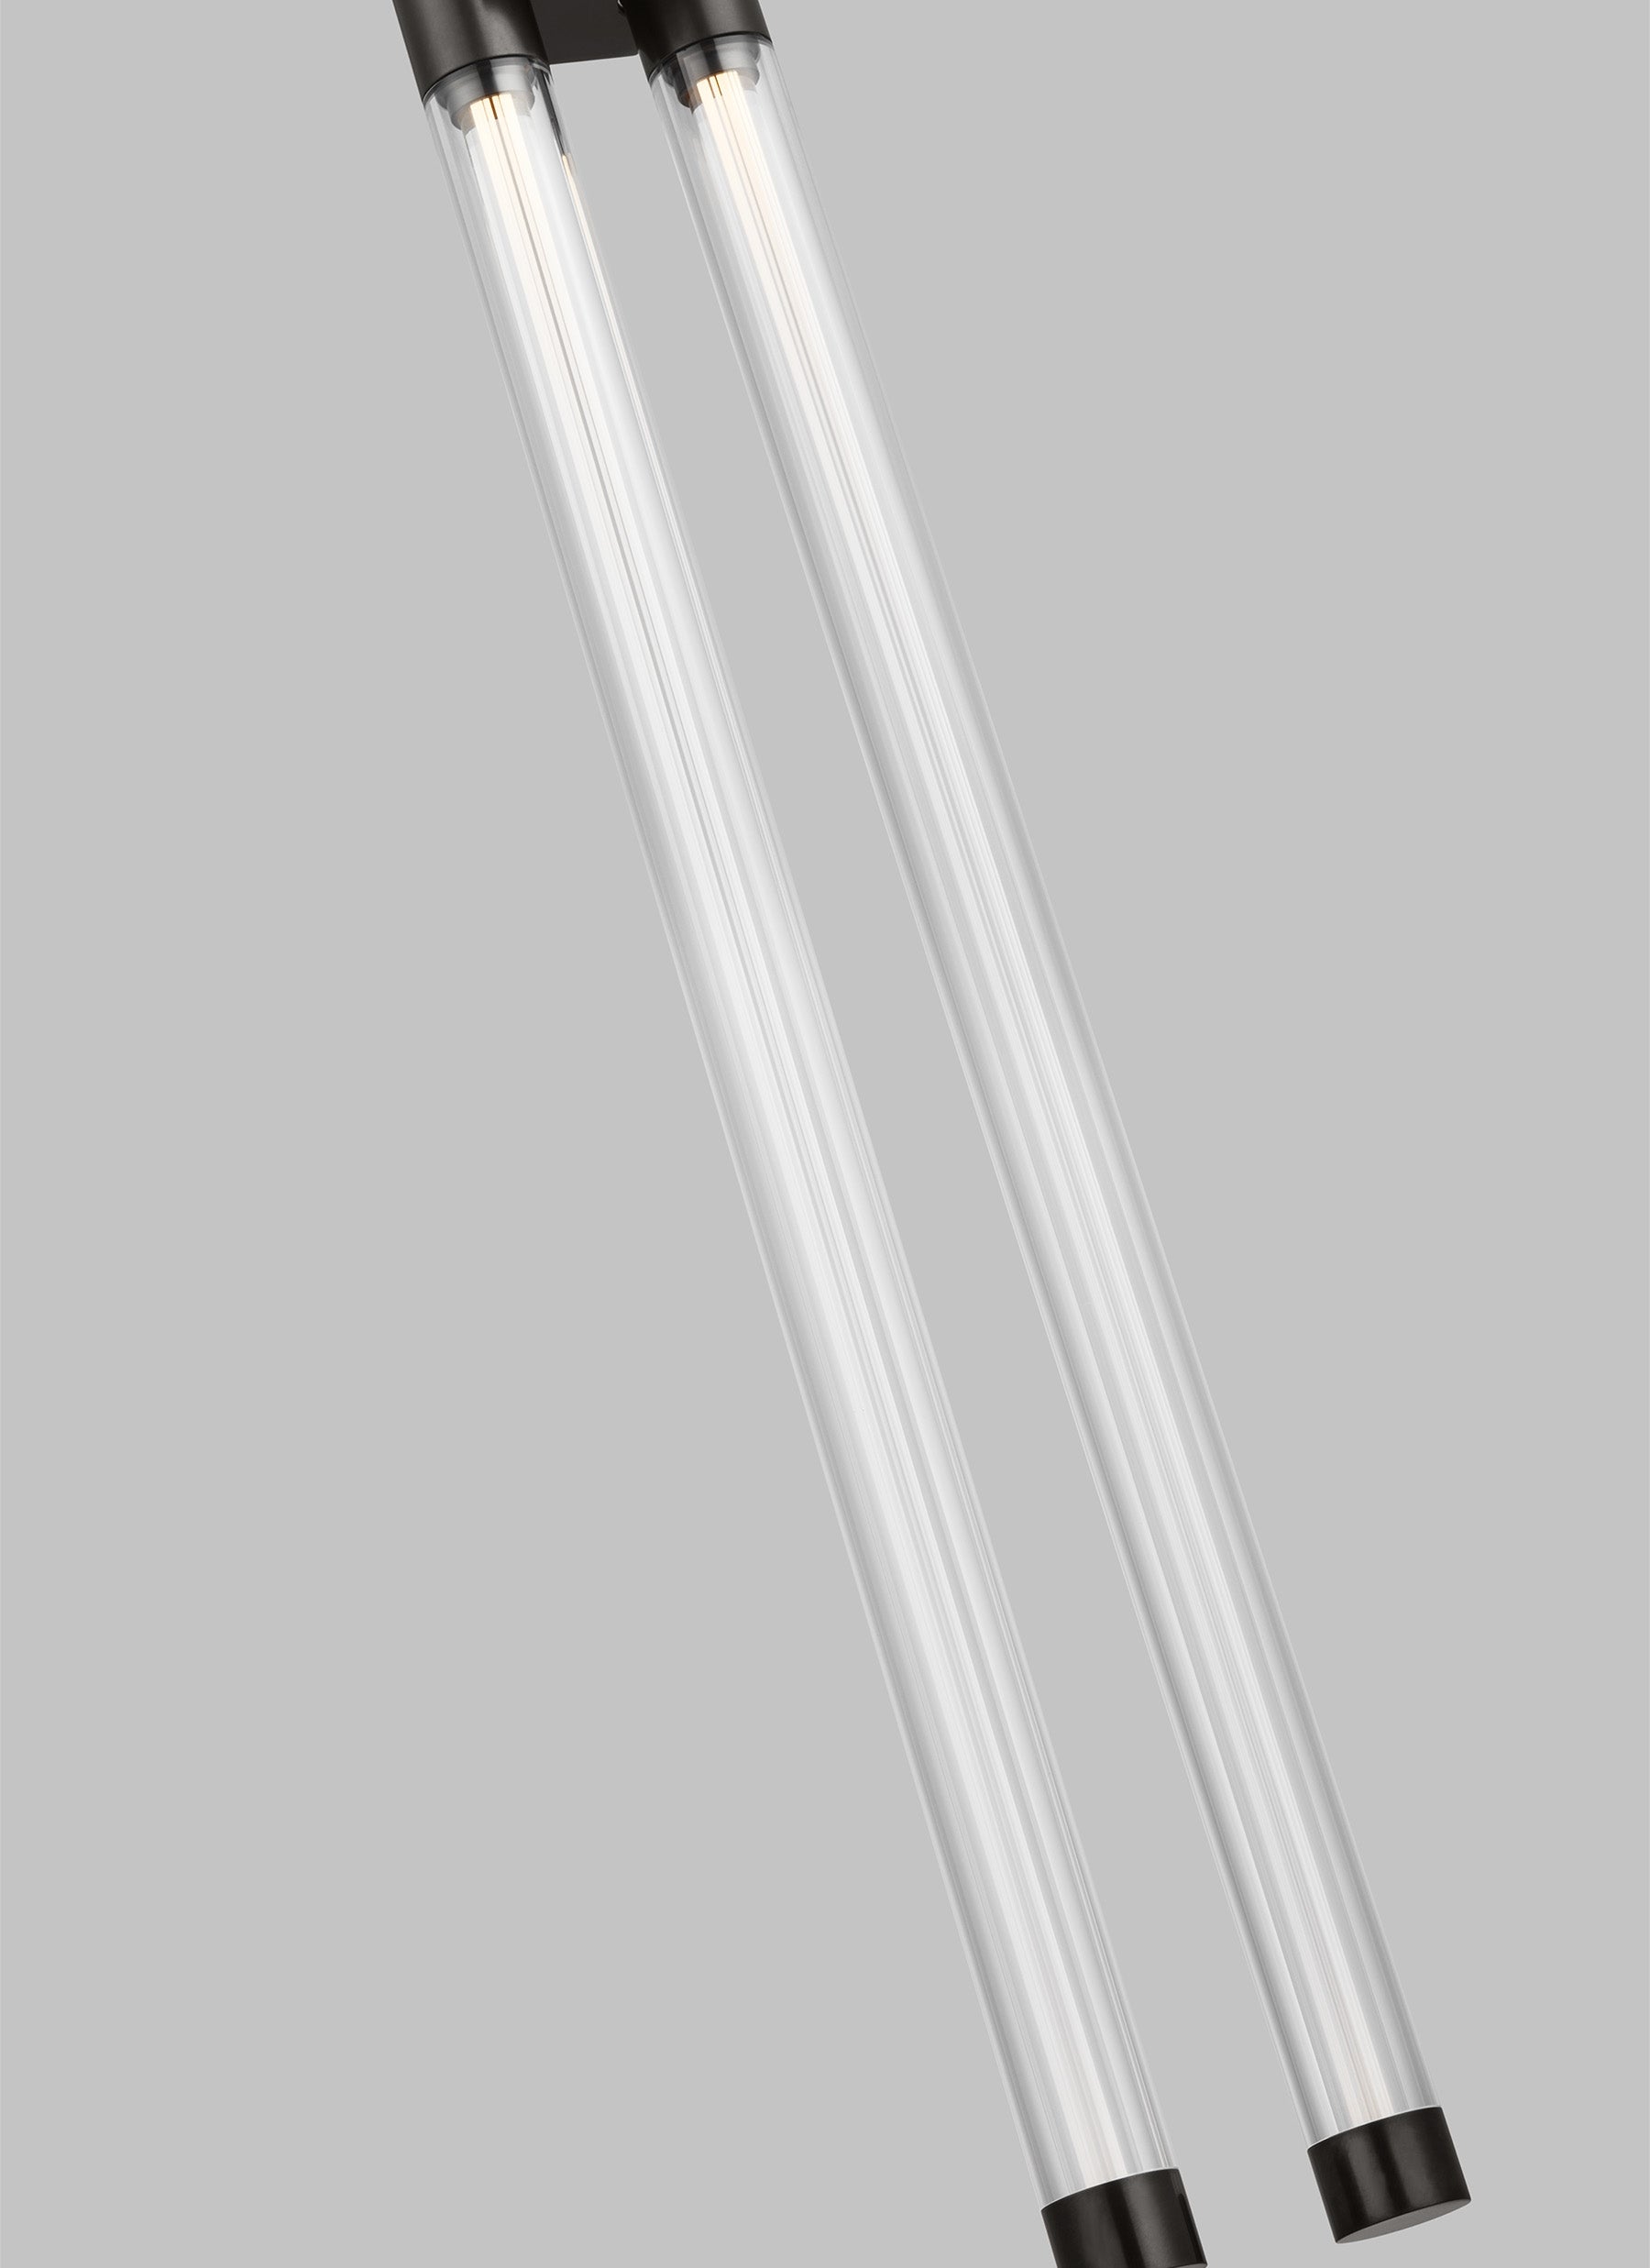 Decorative Lighting Fixture - Phobos Small Pendant